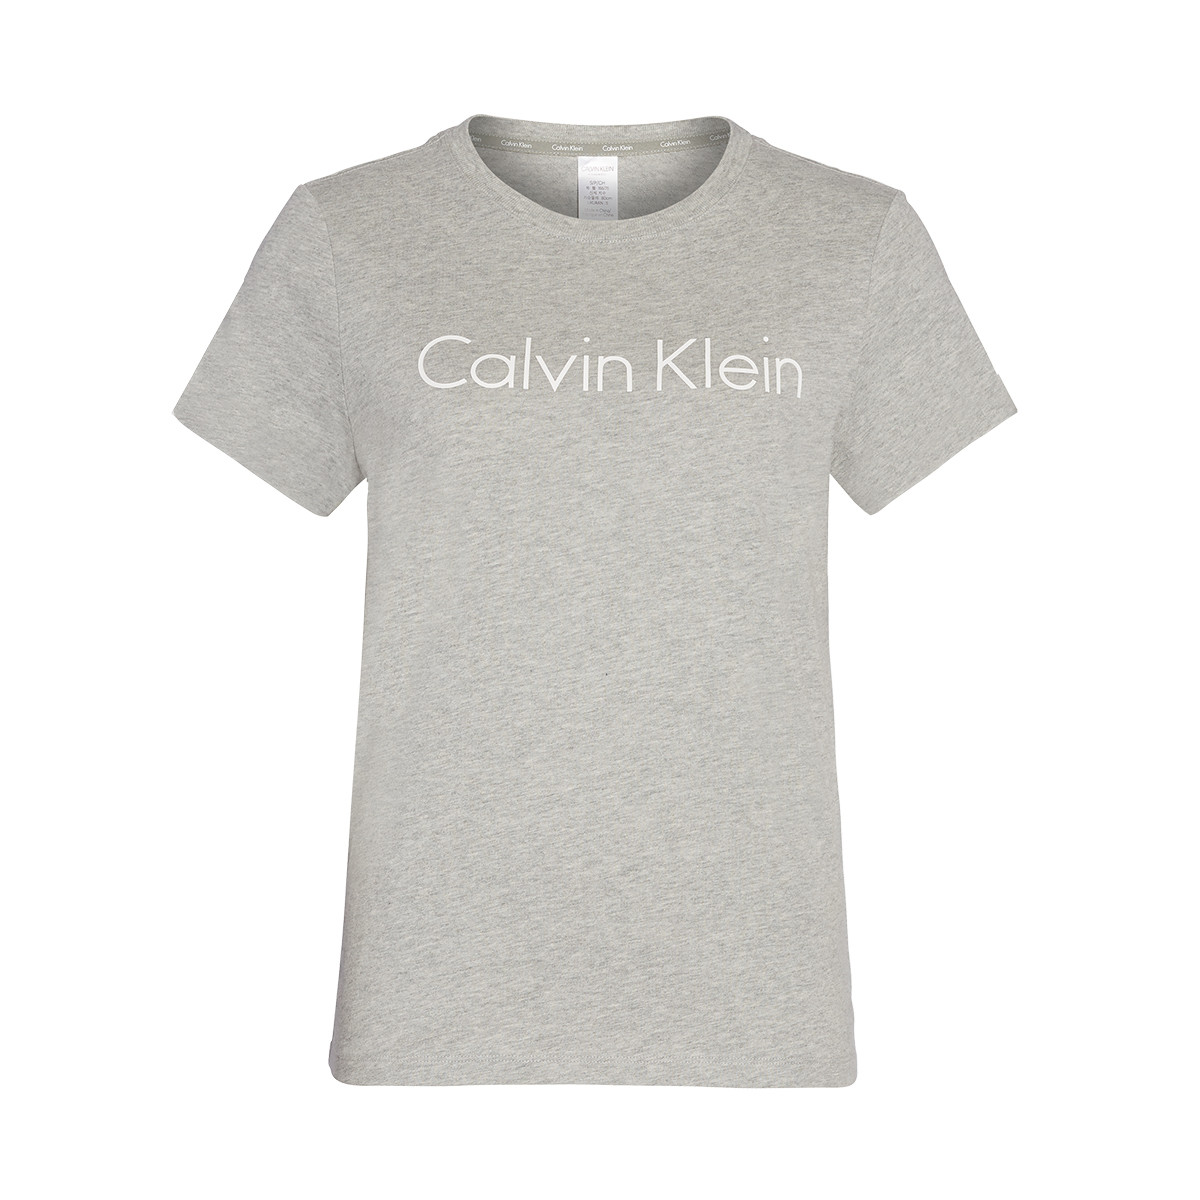 CALVIN KLEIN T-SHIRT S6105 020